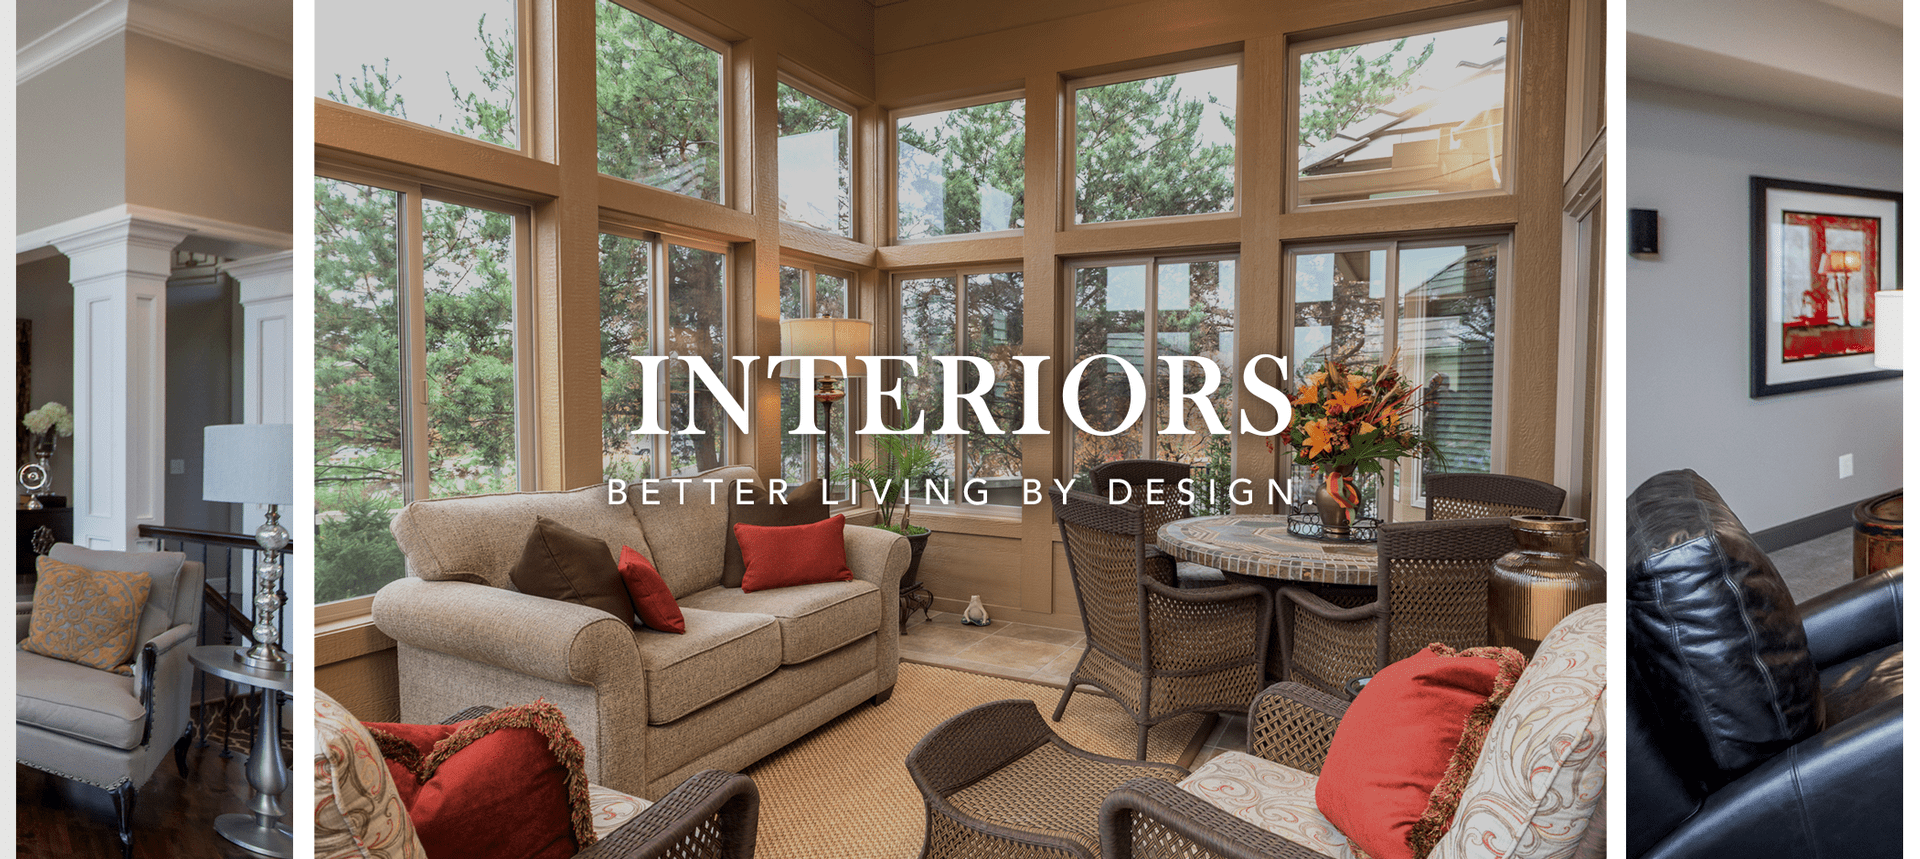 Interior Design Services by Interior Designer Kansas City at R Designs, LLC